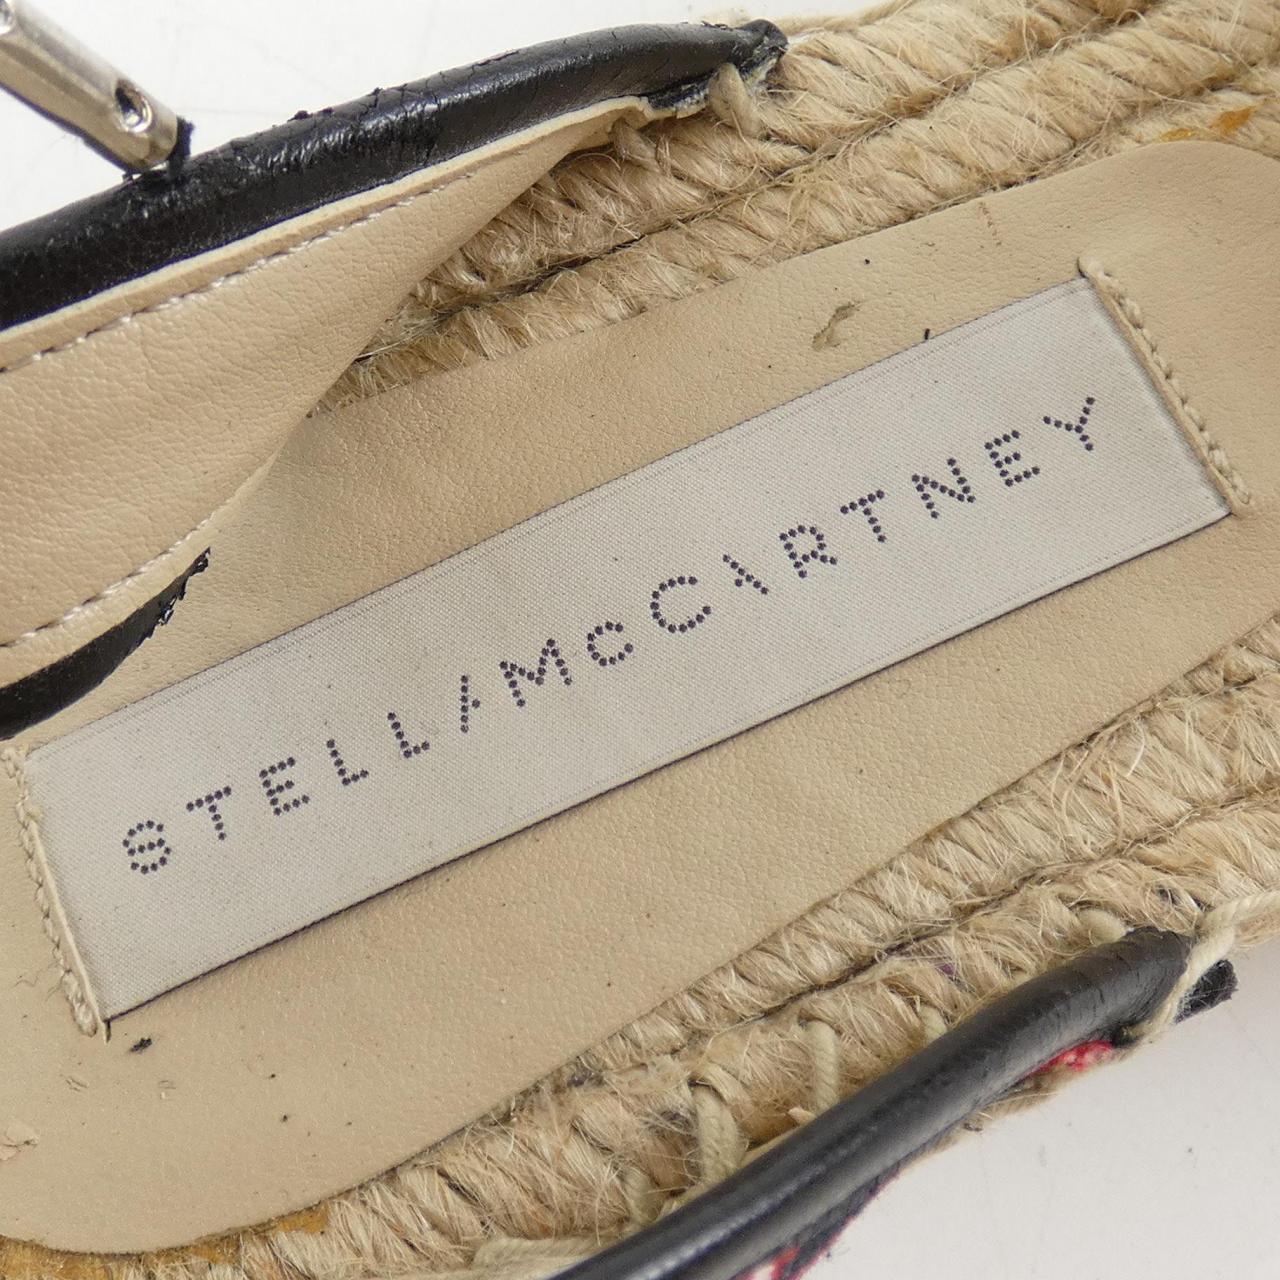 STELLA MCCARTNEY STELLA MCCARTNEY sandals